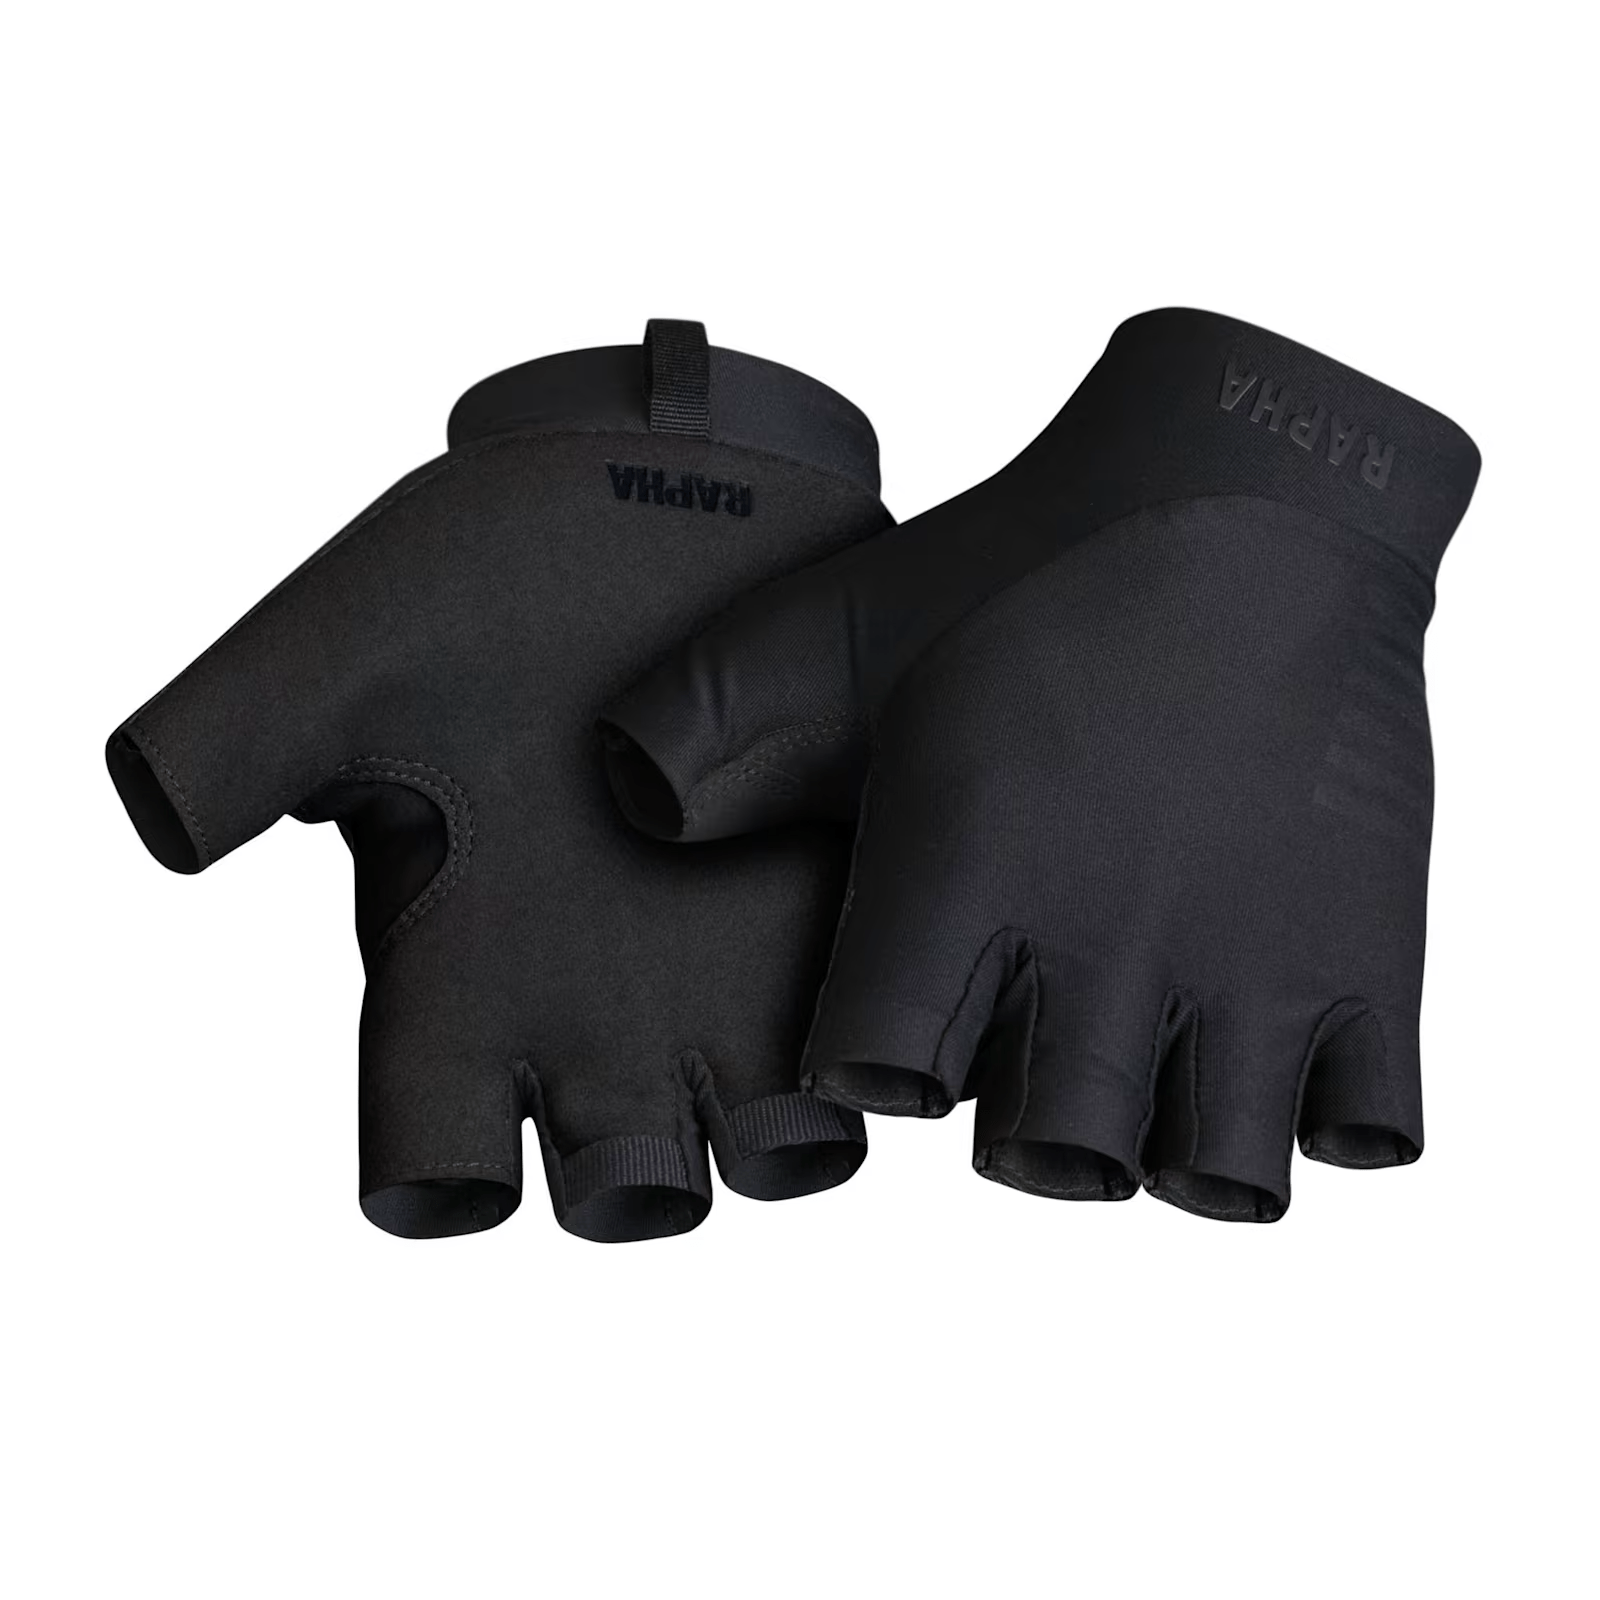 Rapha Pro Team Mitts Black / XXS Apparel - Apparel Accessories - Gloves - Road